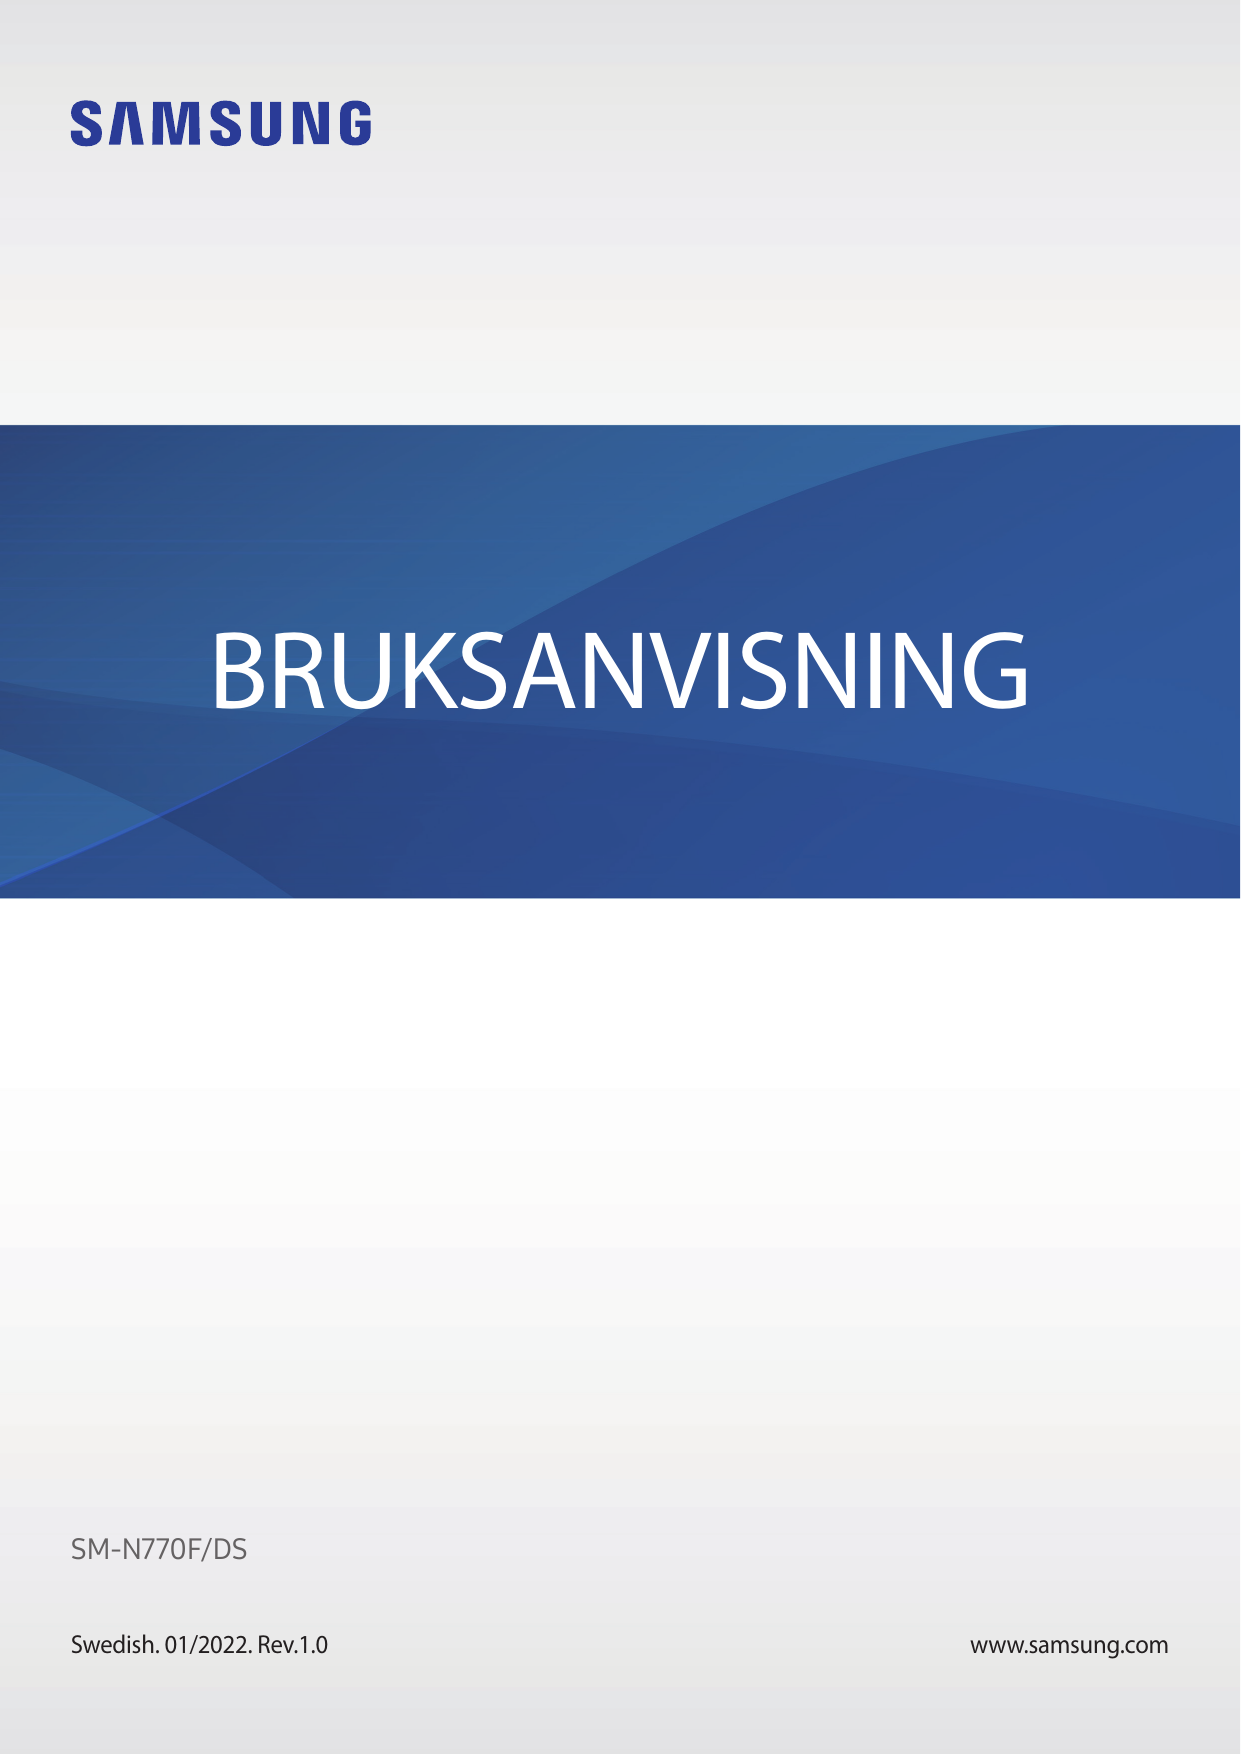 BRUKSANVISNINGSM-N770F/DSSwedish. 01/2022. Rev.1.0www.samsung.com